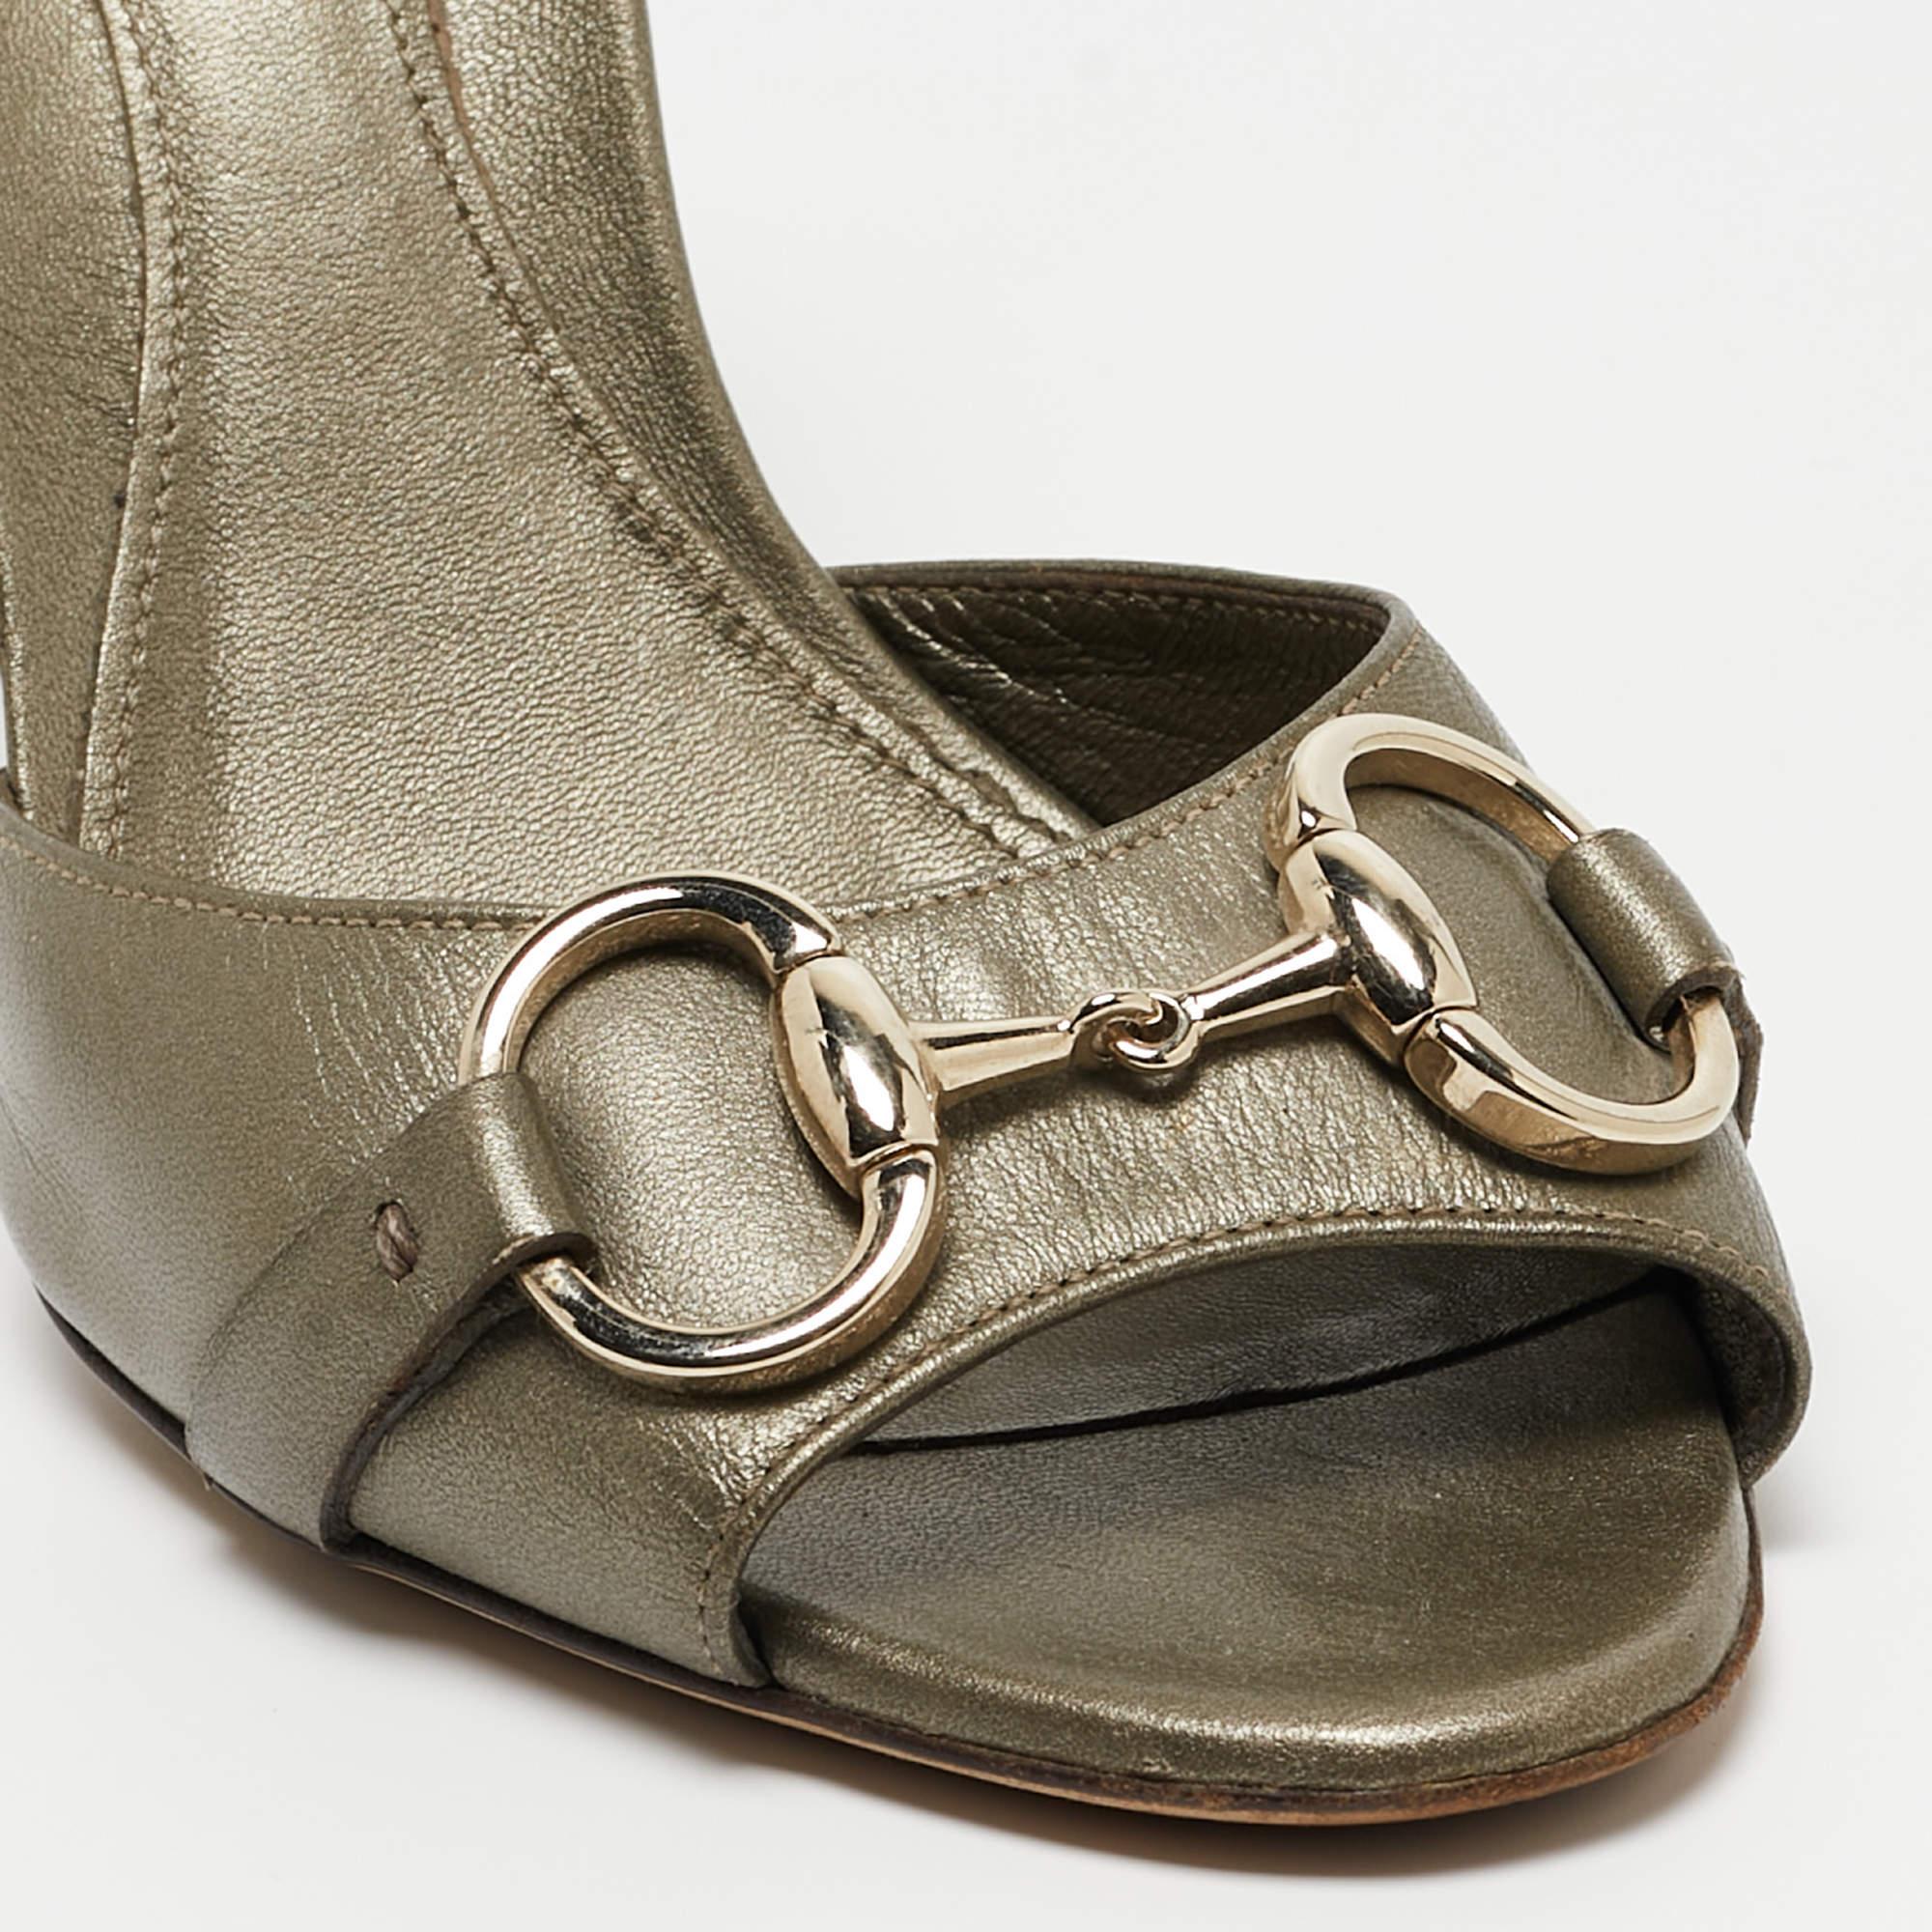 Gucci Metallic Leather Horsebit Slide Sandals Size 37 1